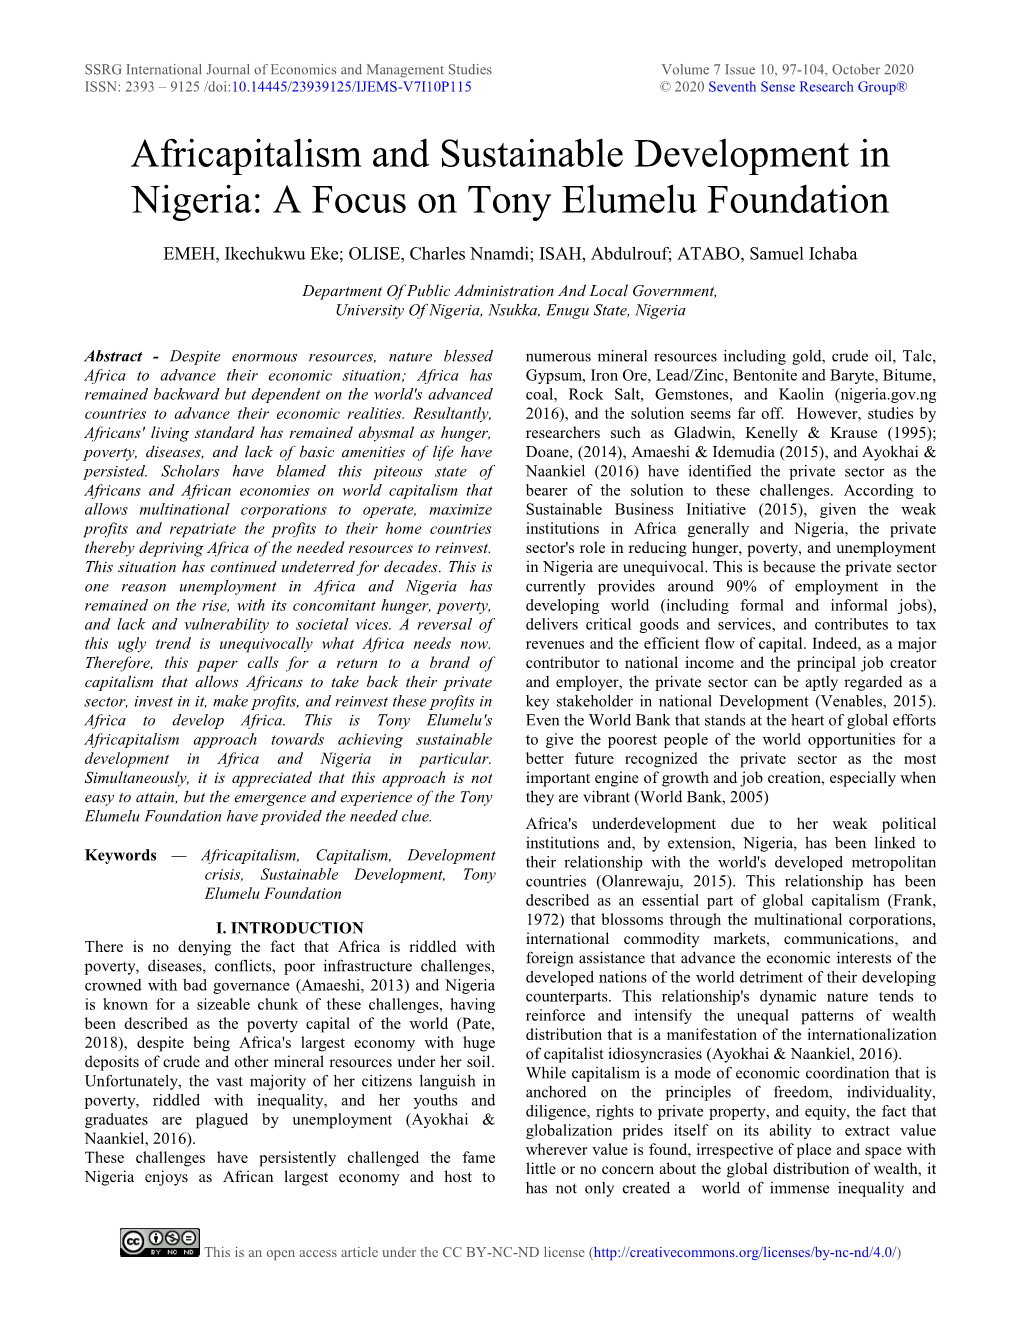 A Focus on Tony Elumelu Foundation